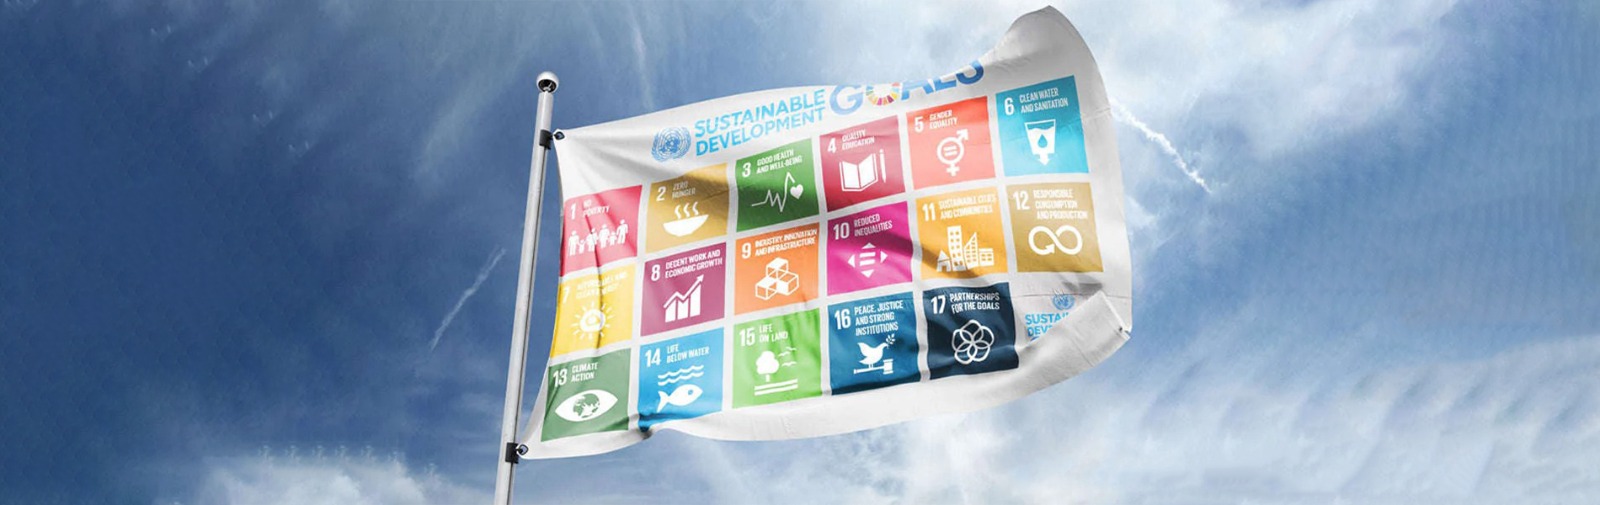 Sustainability development goals